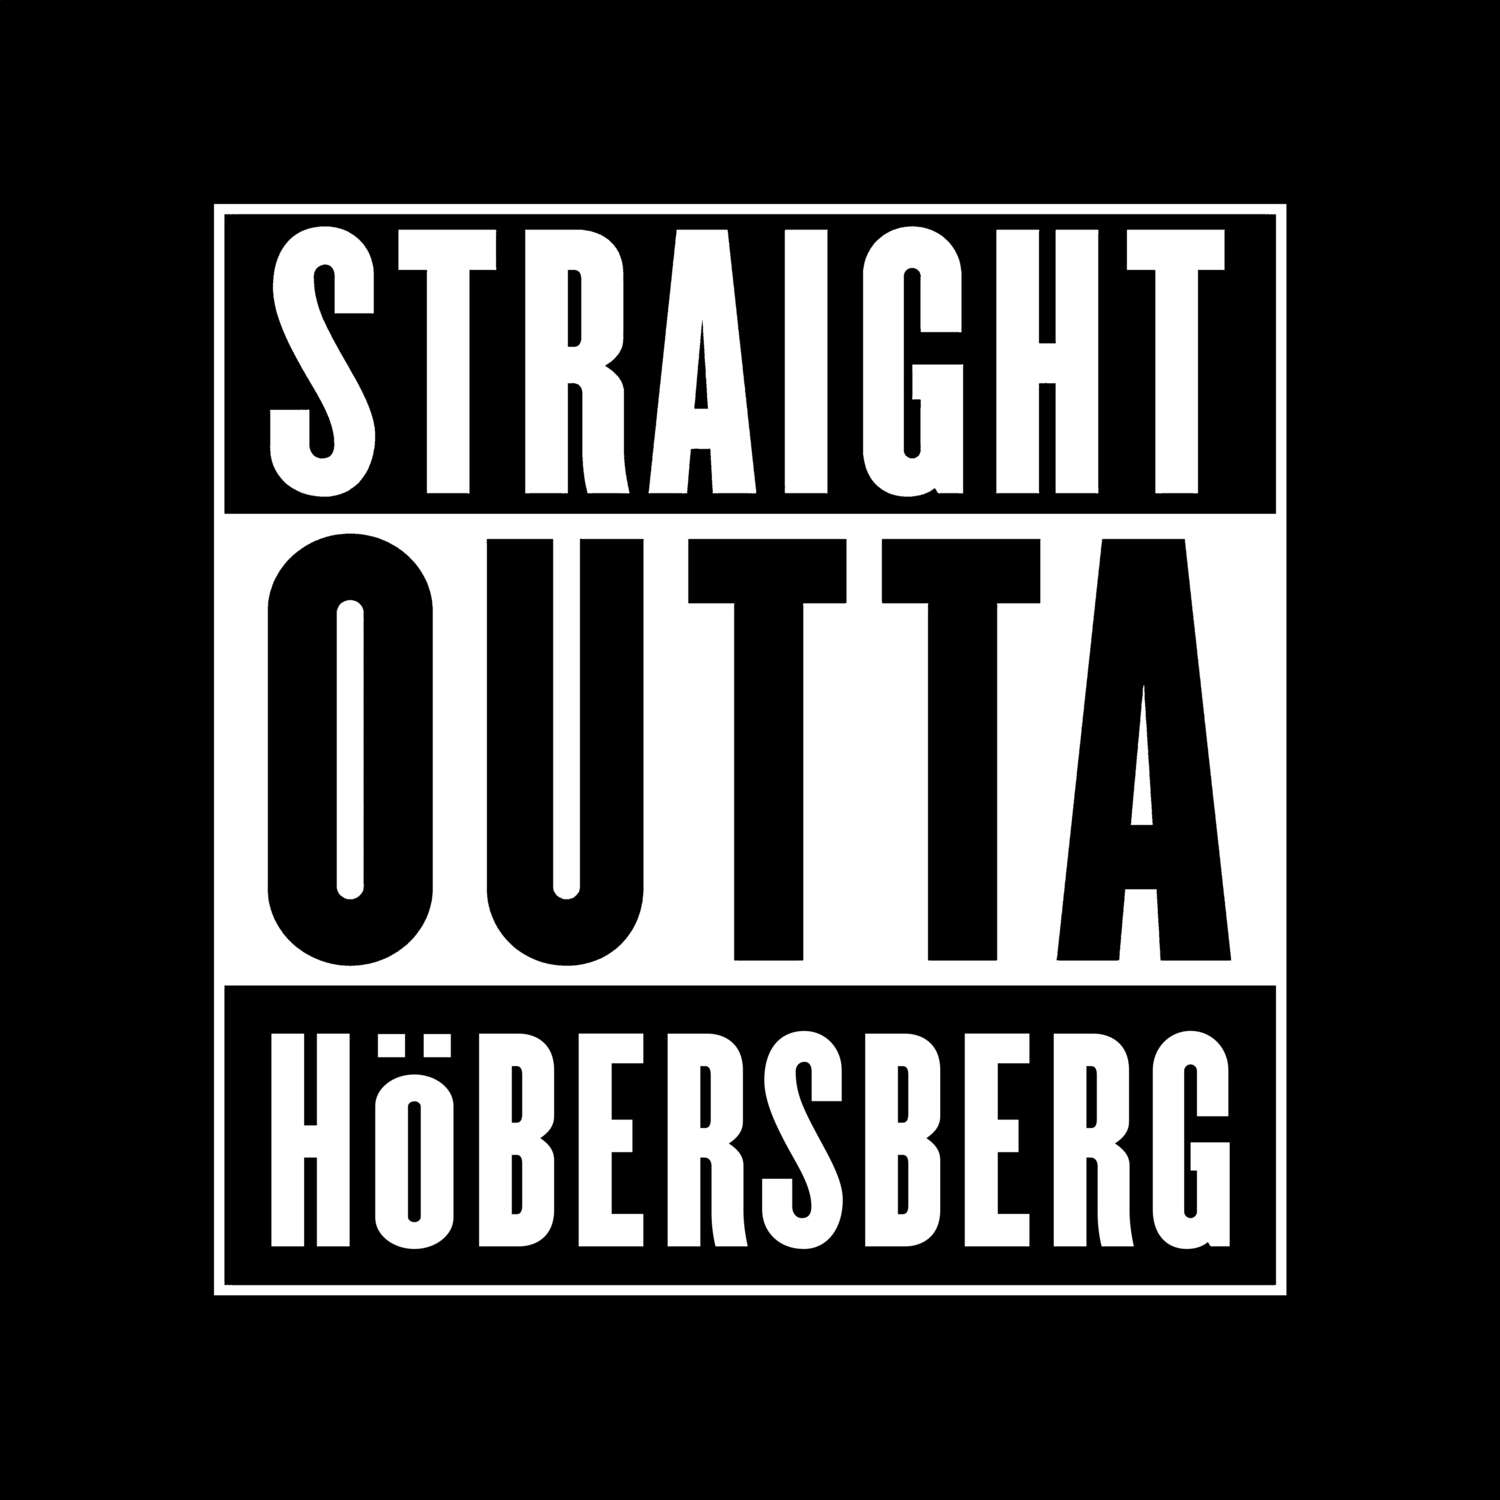 Höbersberg T-Shirt »Straight Outta«